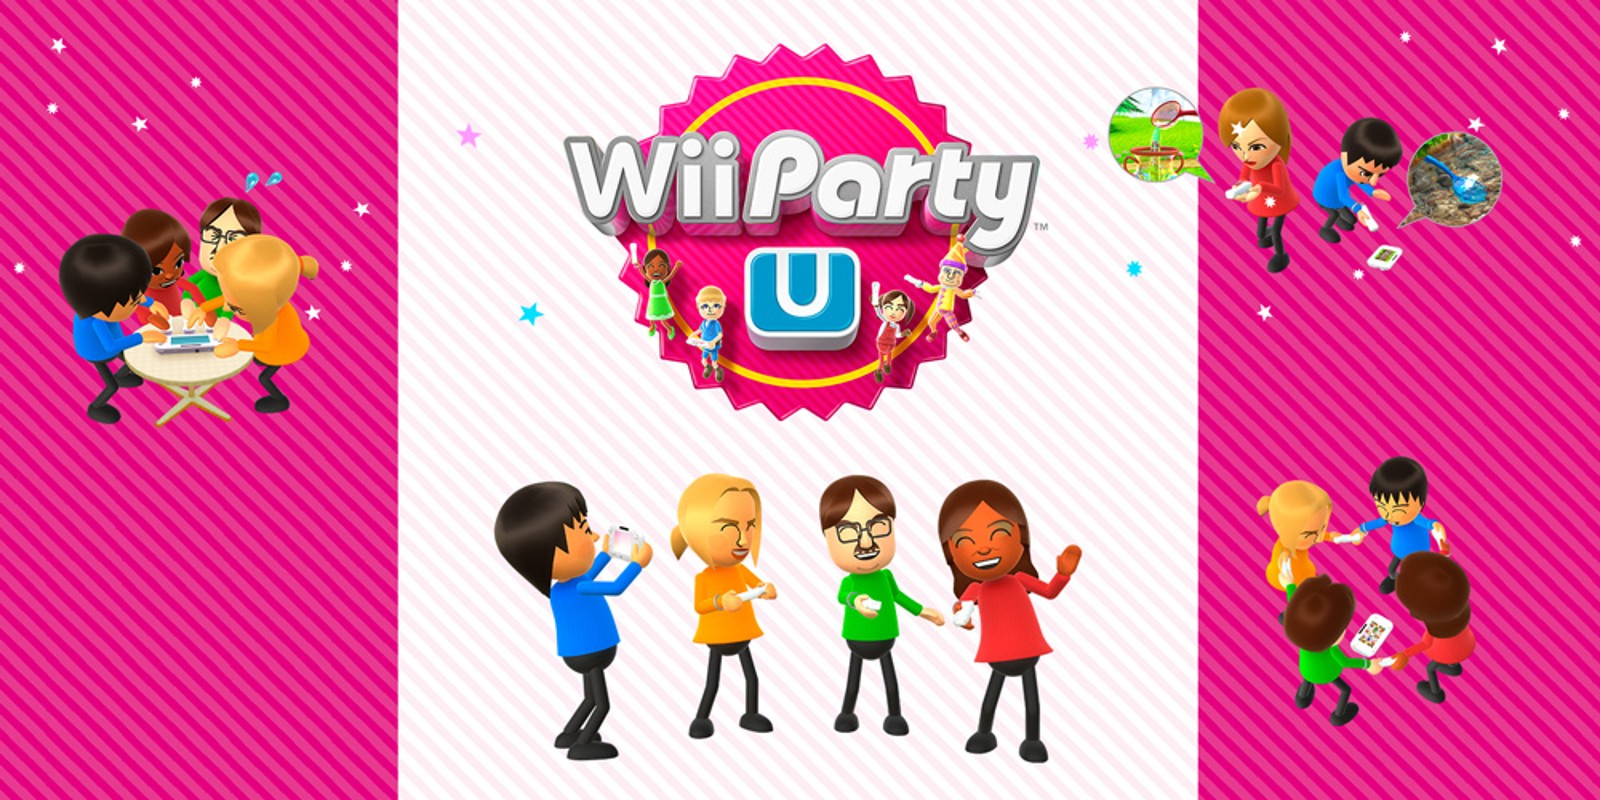 Wii Party U | Wii U | Games | Nintendo1600 x 800